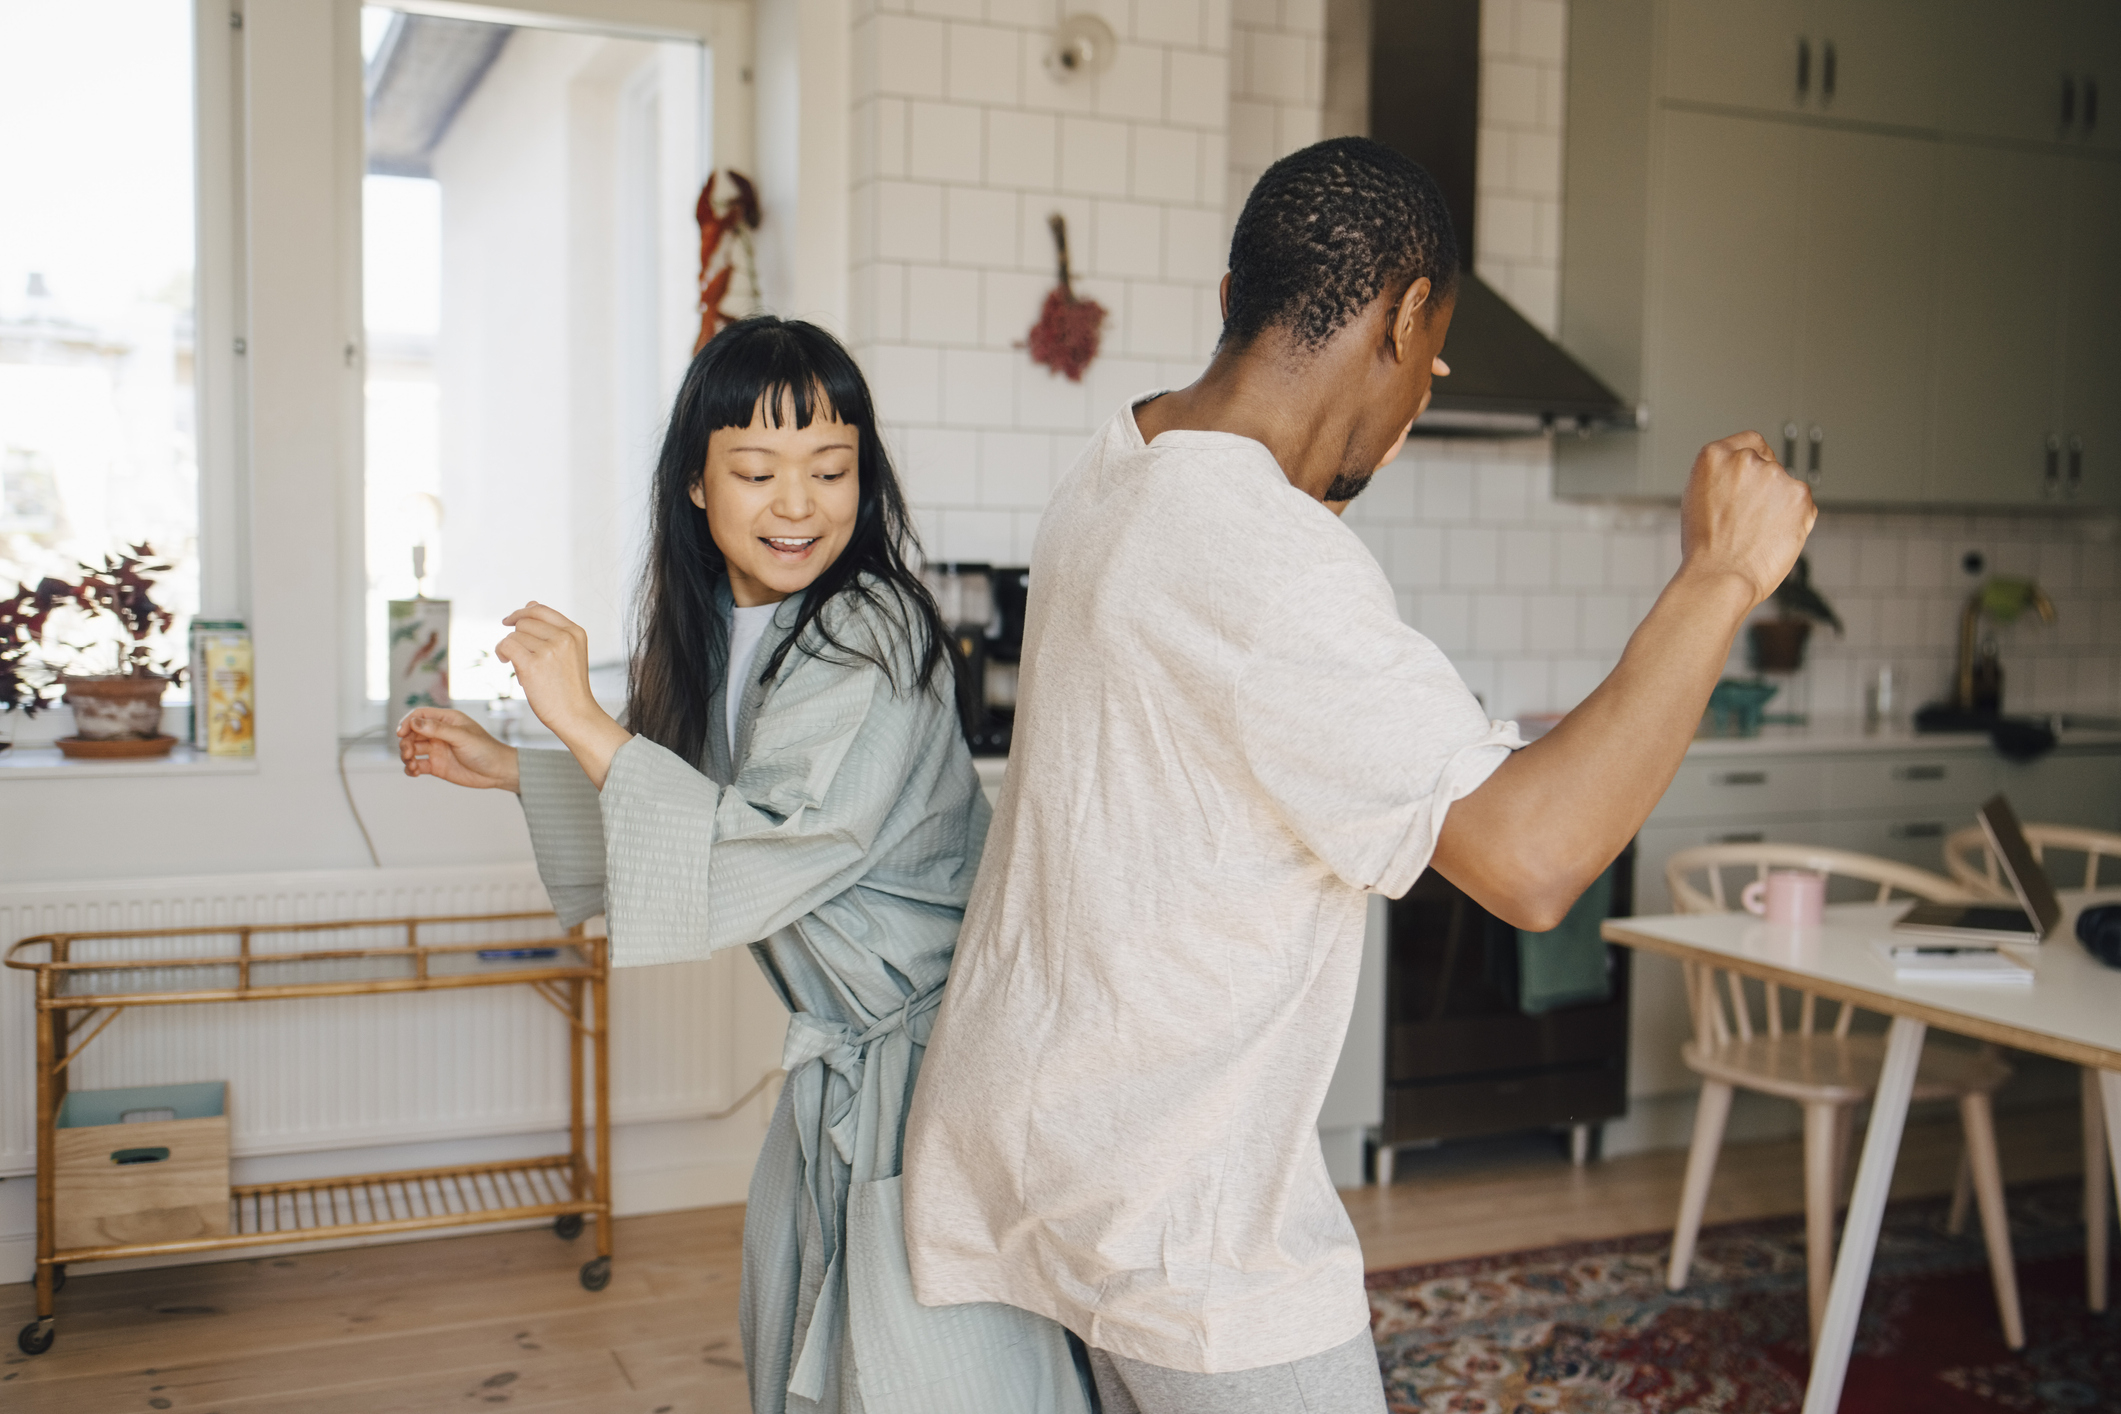 Two people joyfully dancing in a kitchen